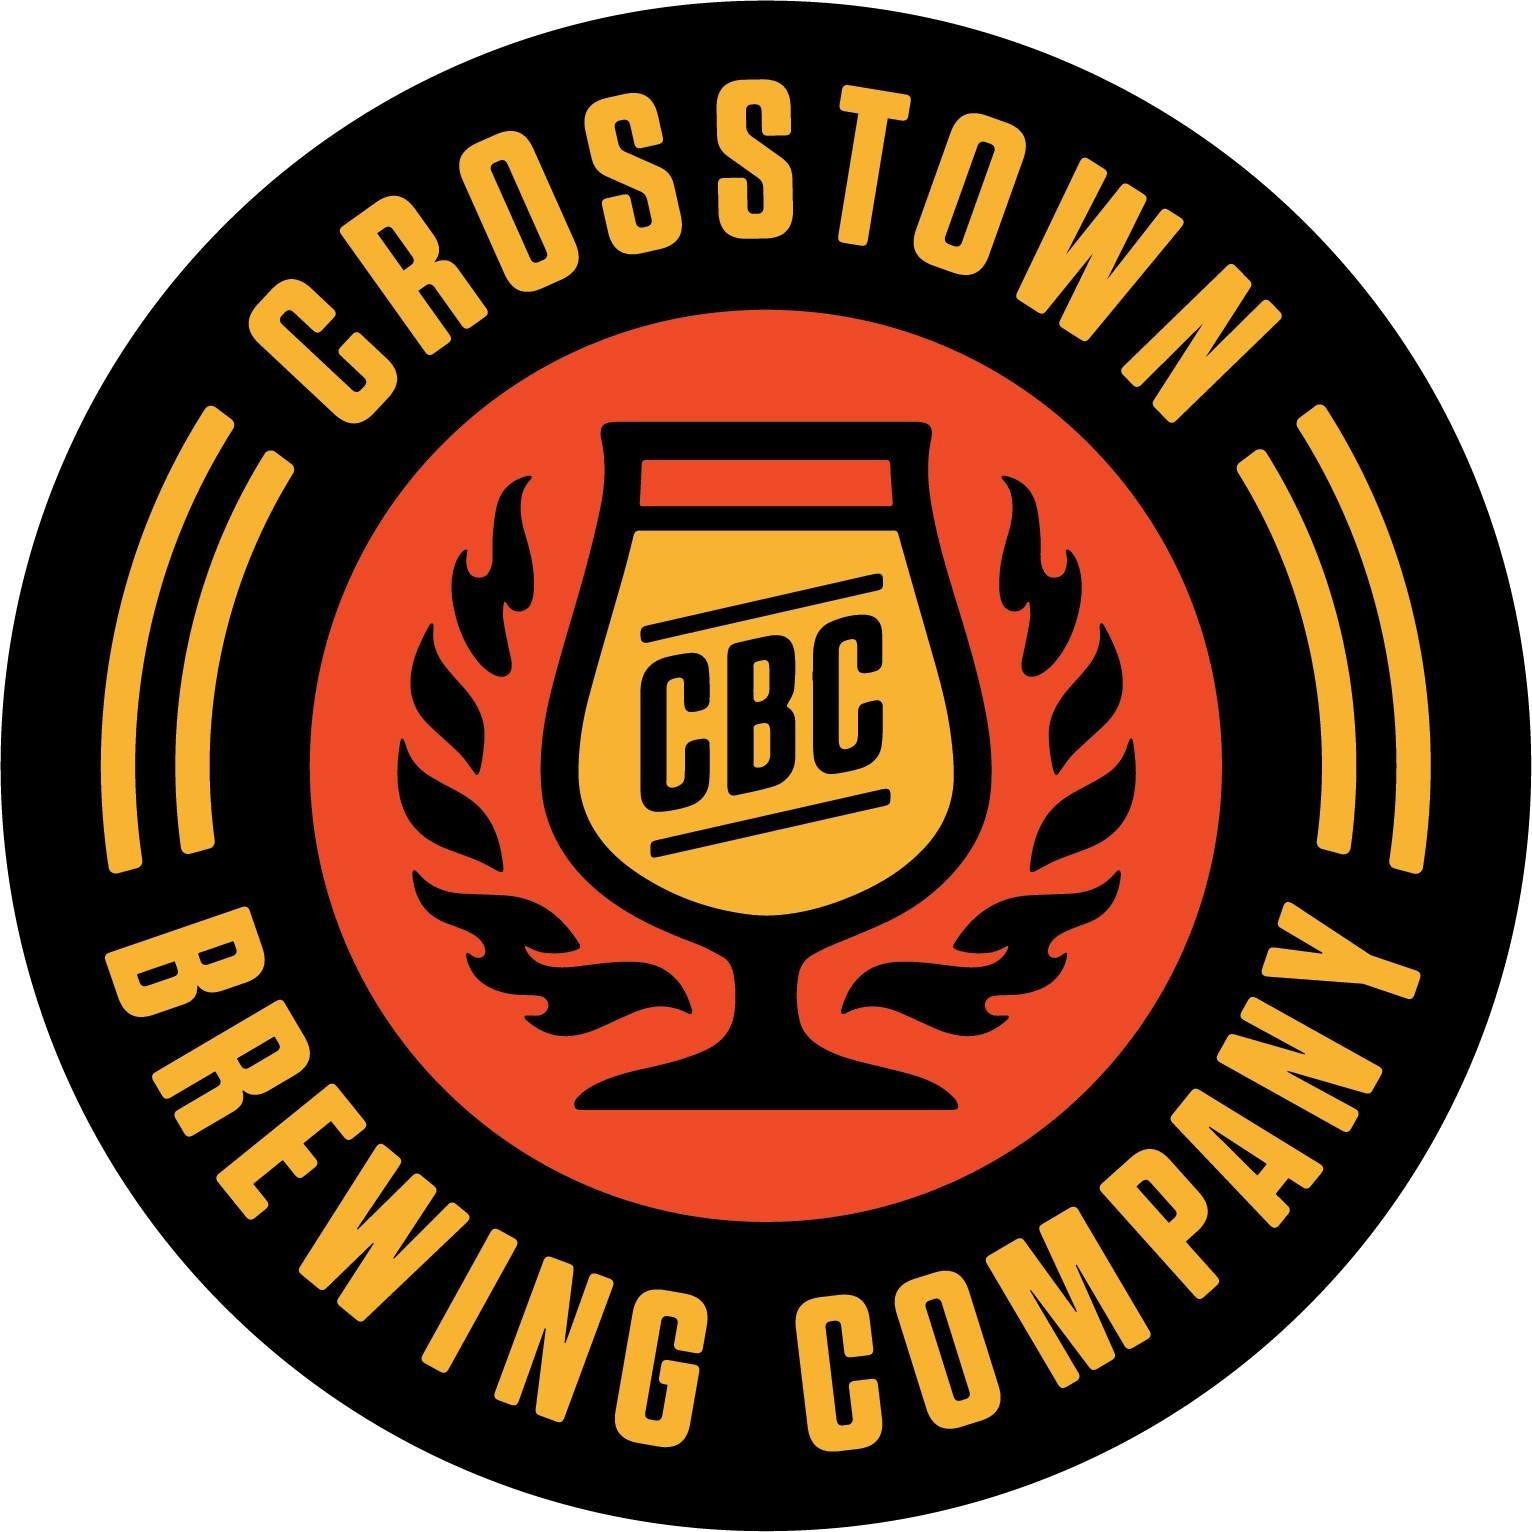 Crosstown Brewing C